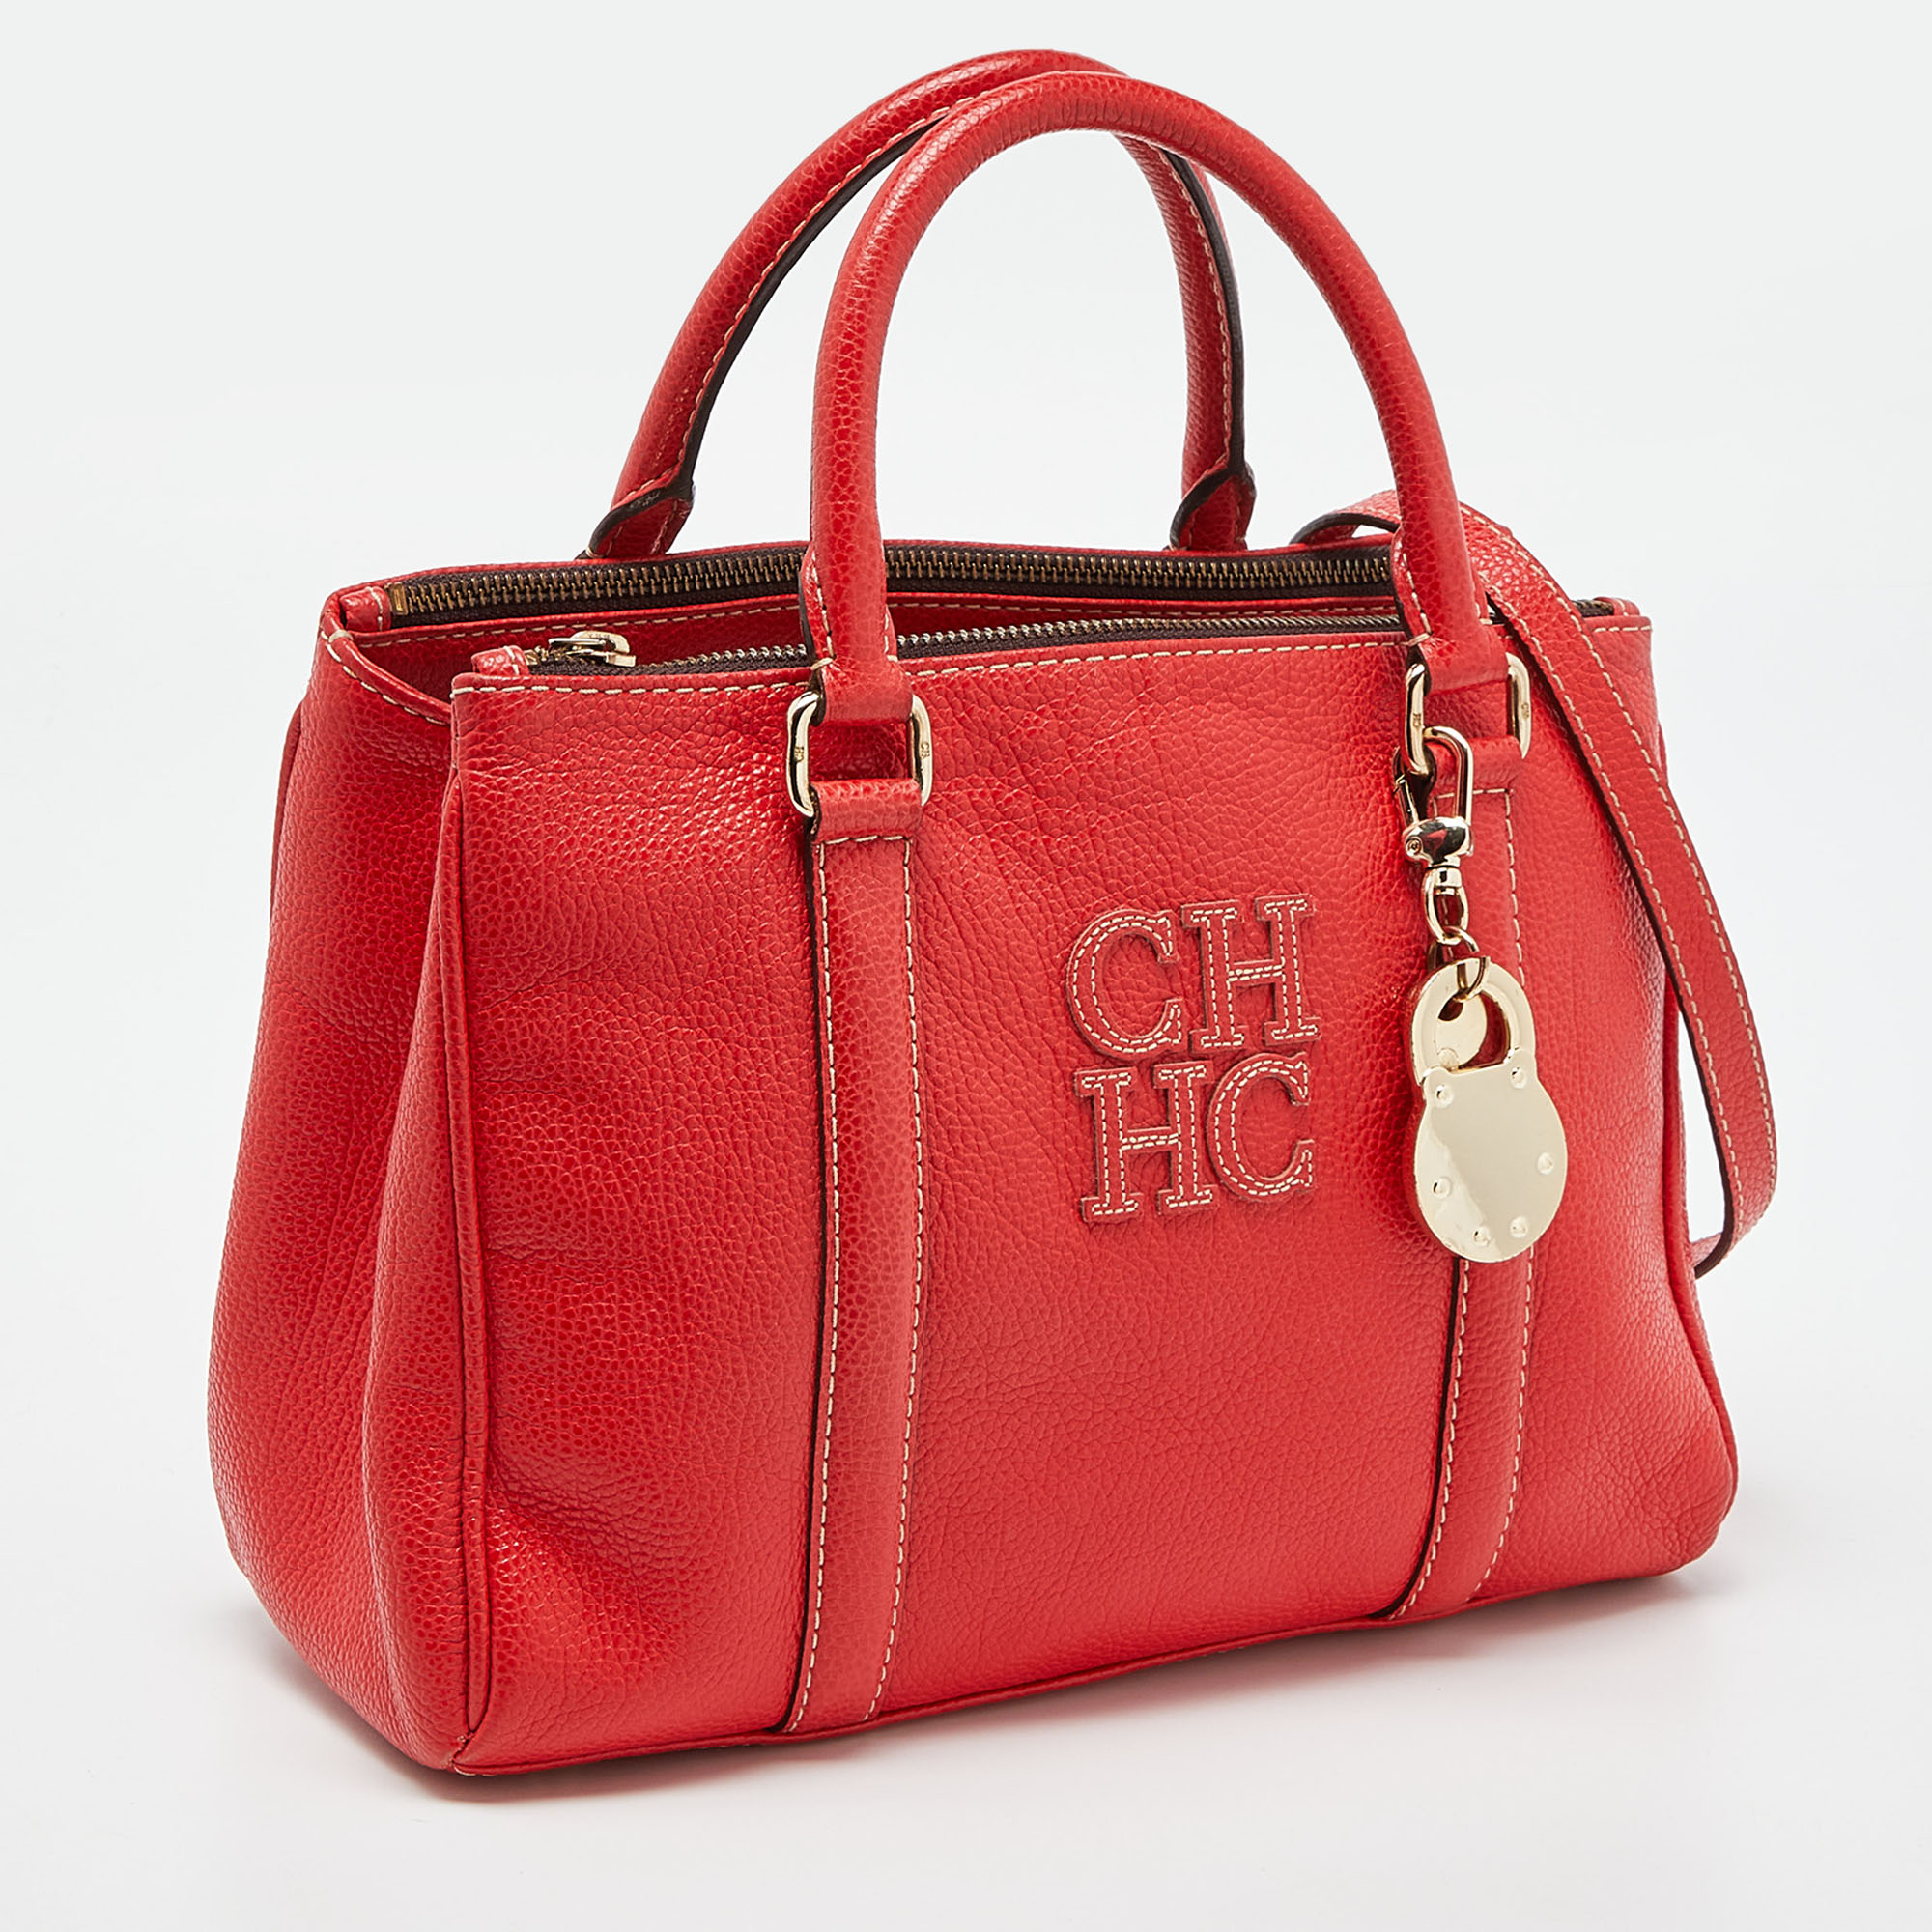 CH Carolina Herrera Red Pebbled Leather Matteo Tote